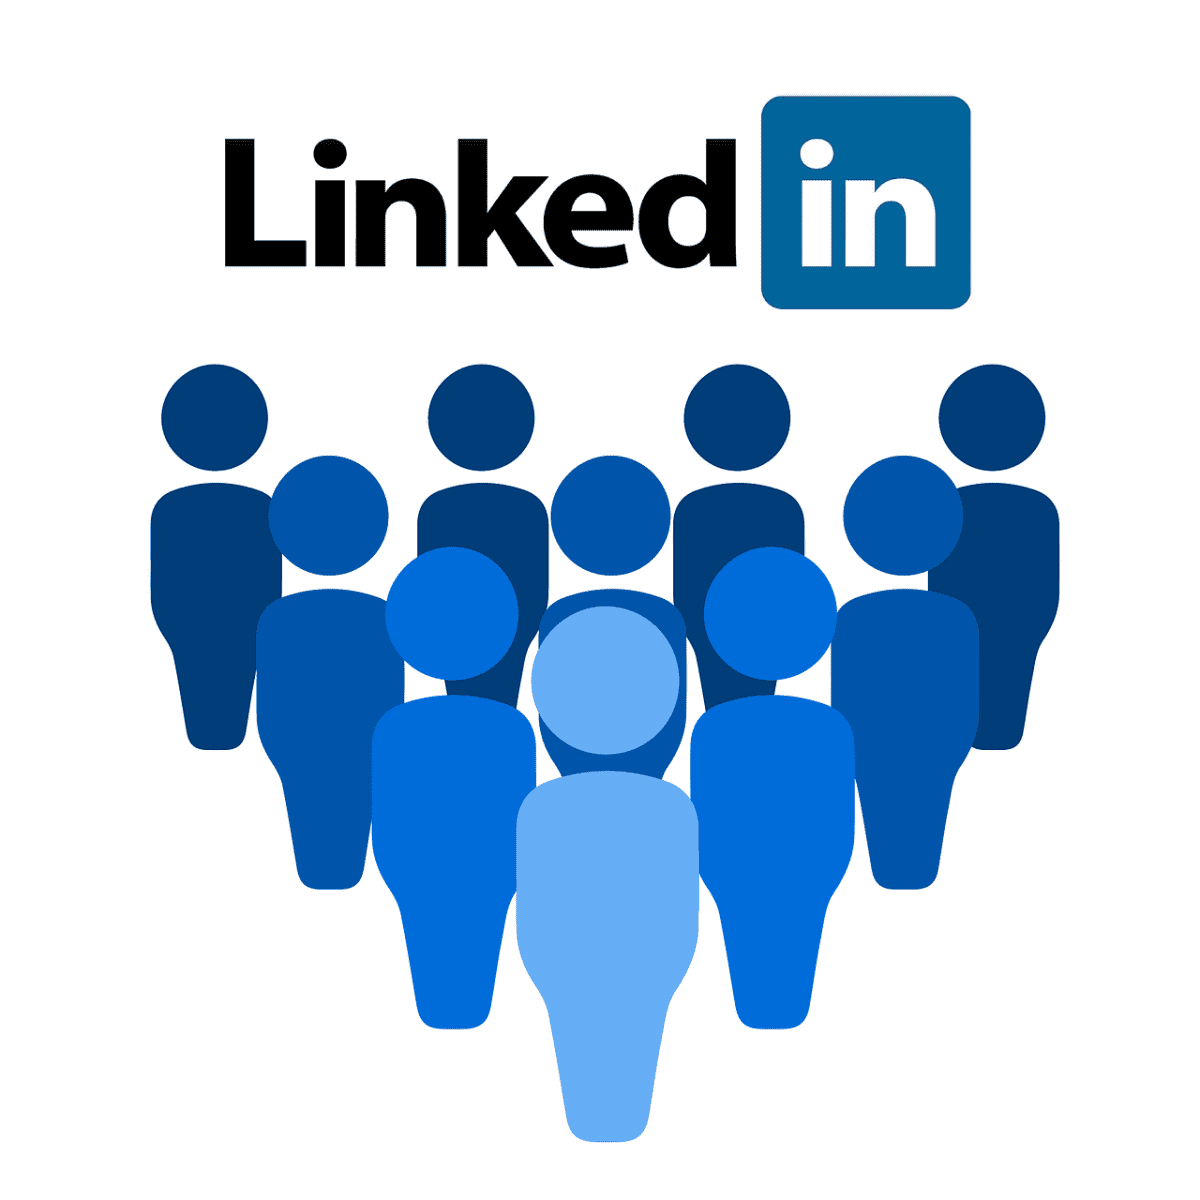 LinkedIn logo with people